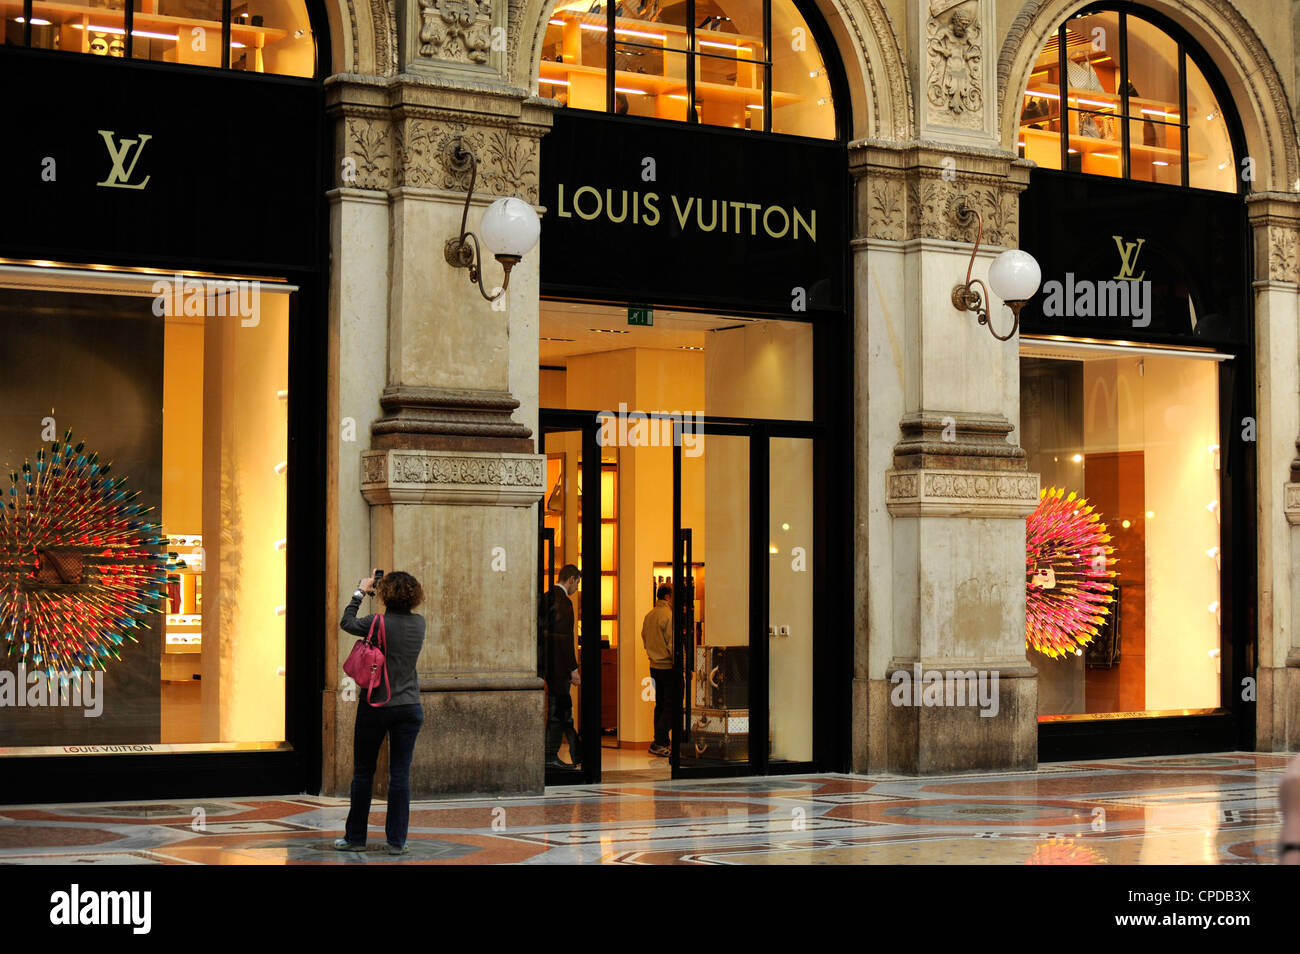 Louis Vuitton-Geschäft. Galleria Vittorio Emanuele II. Mailand, Italien  Stockfotografie - Alamy